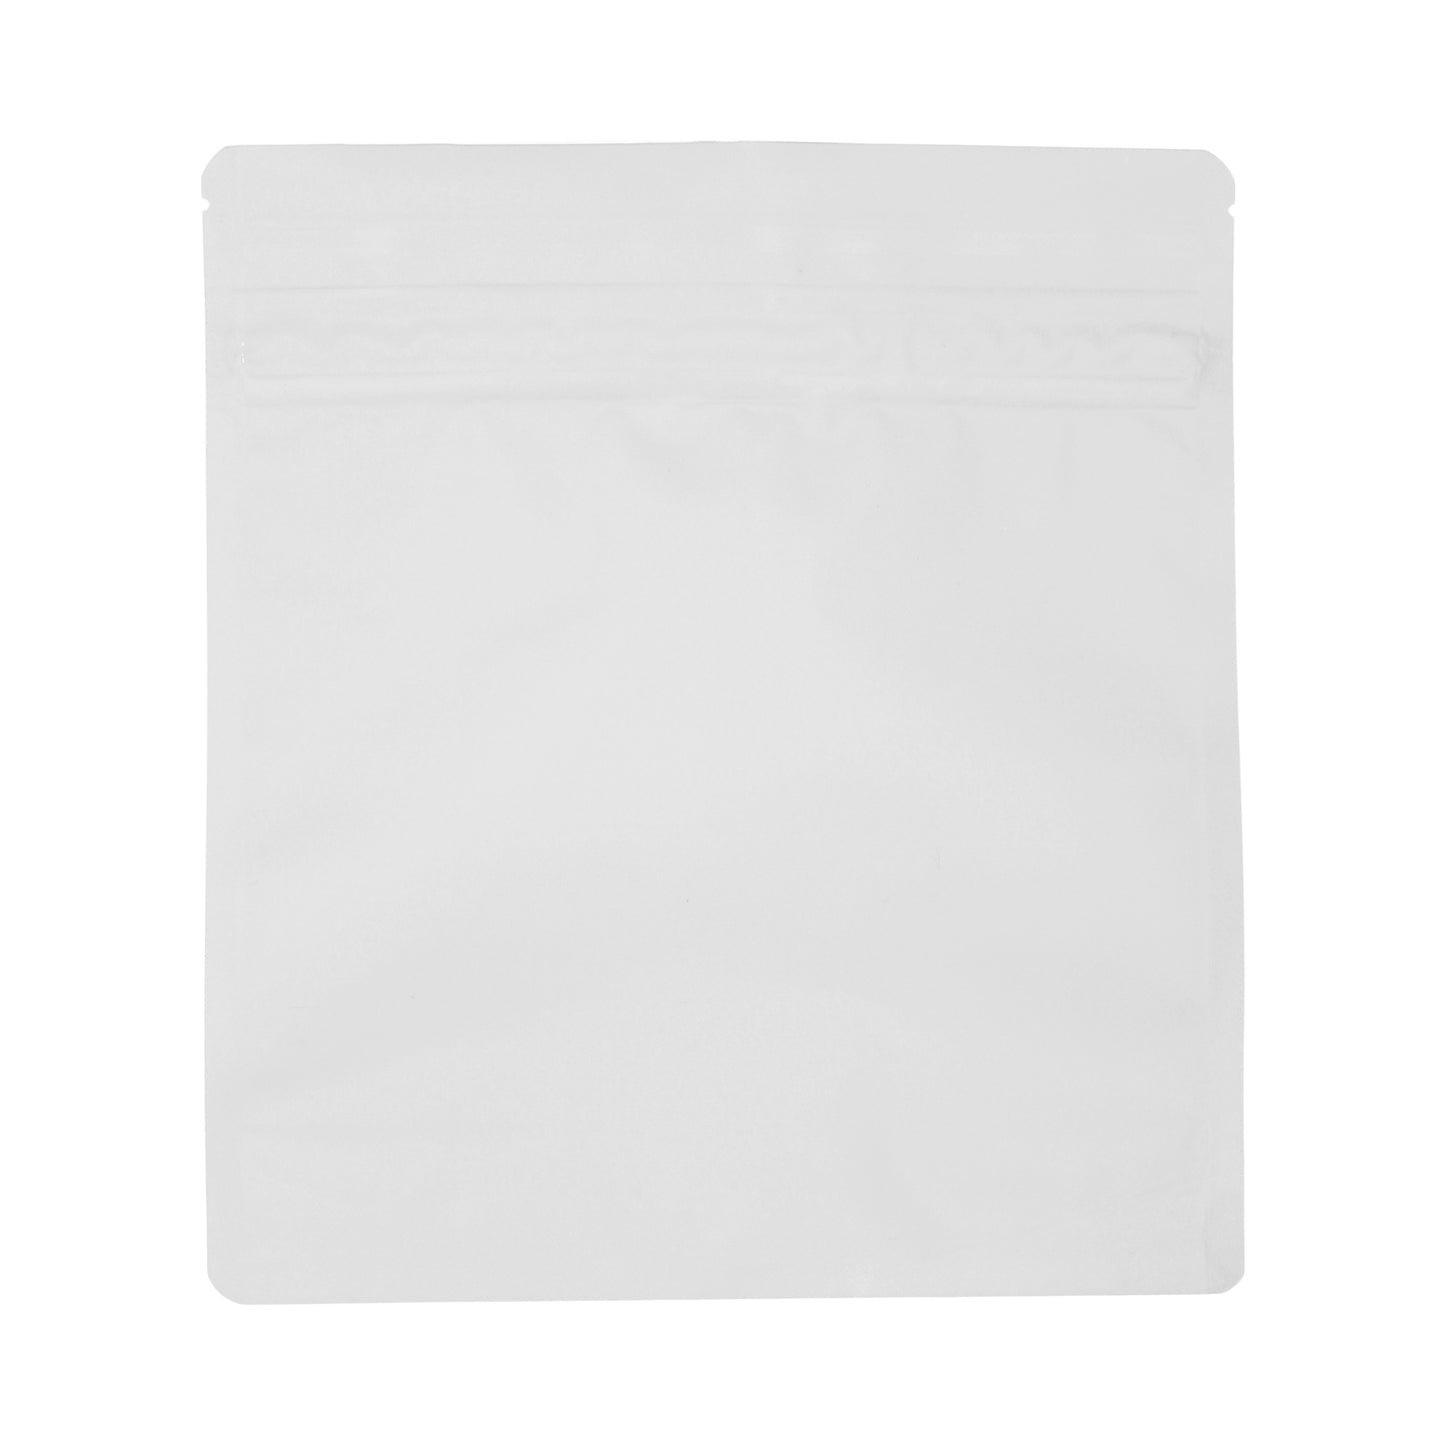 Bag King Child-Resistant Wide Mouth Bag (1 oz) 7" x 7.9" Matte White